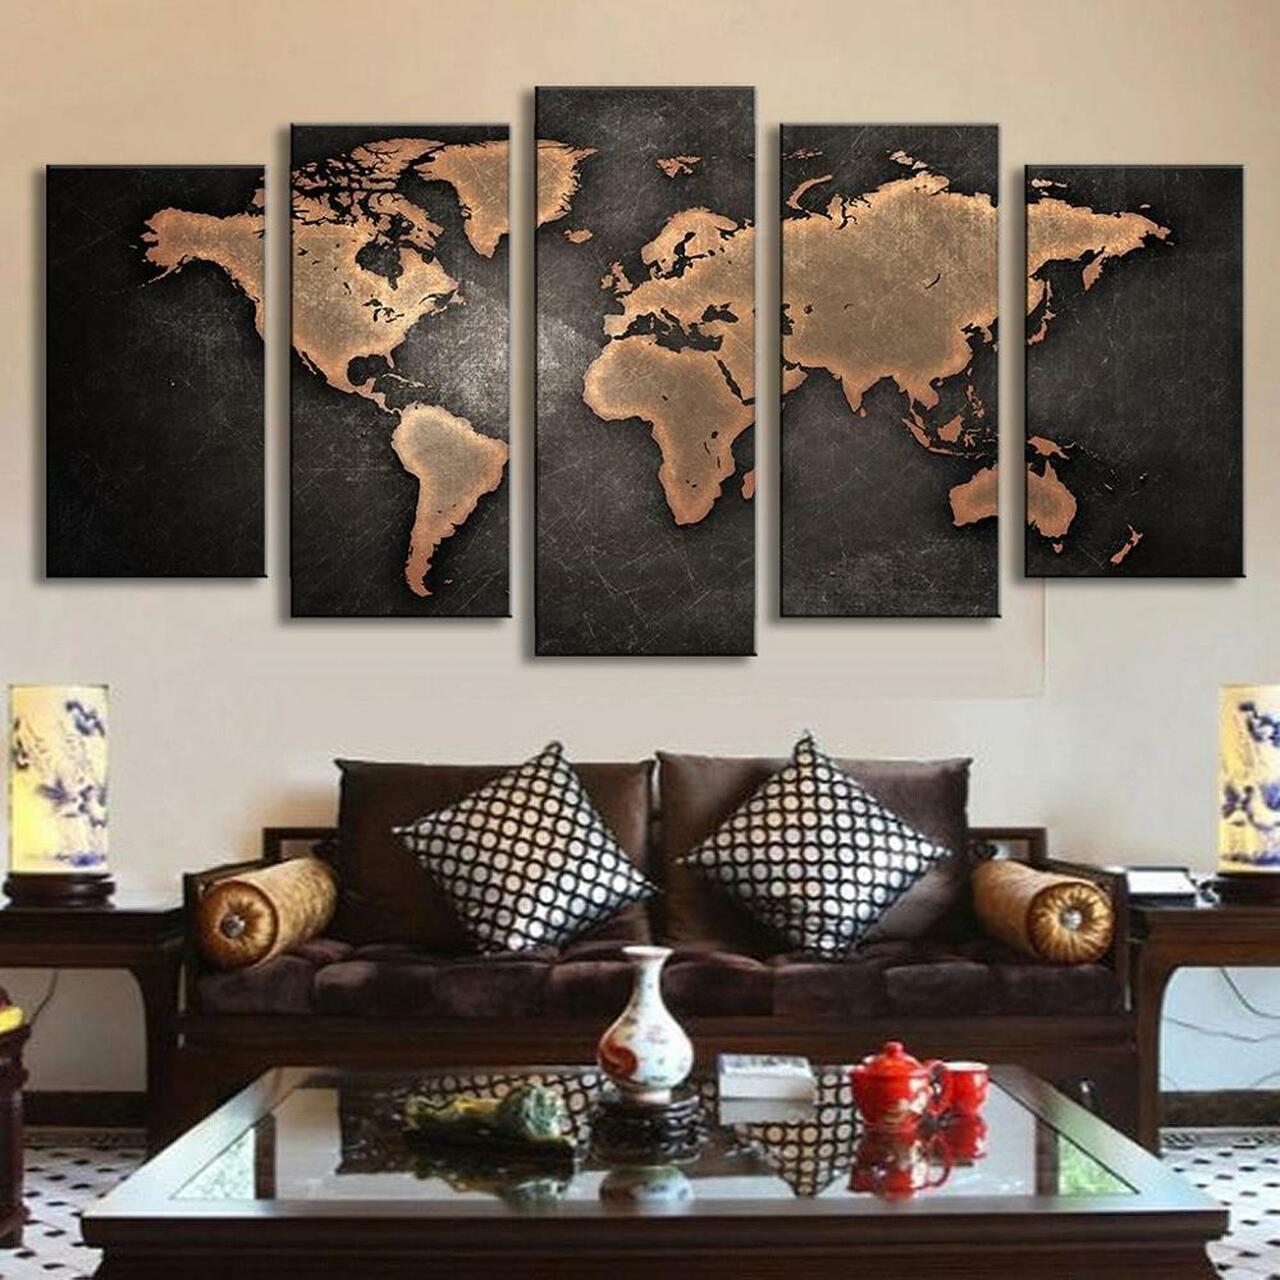 RETRO WORLD MAP 5 Piece Canvas Art Wall Decor